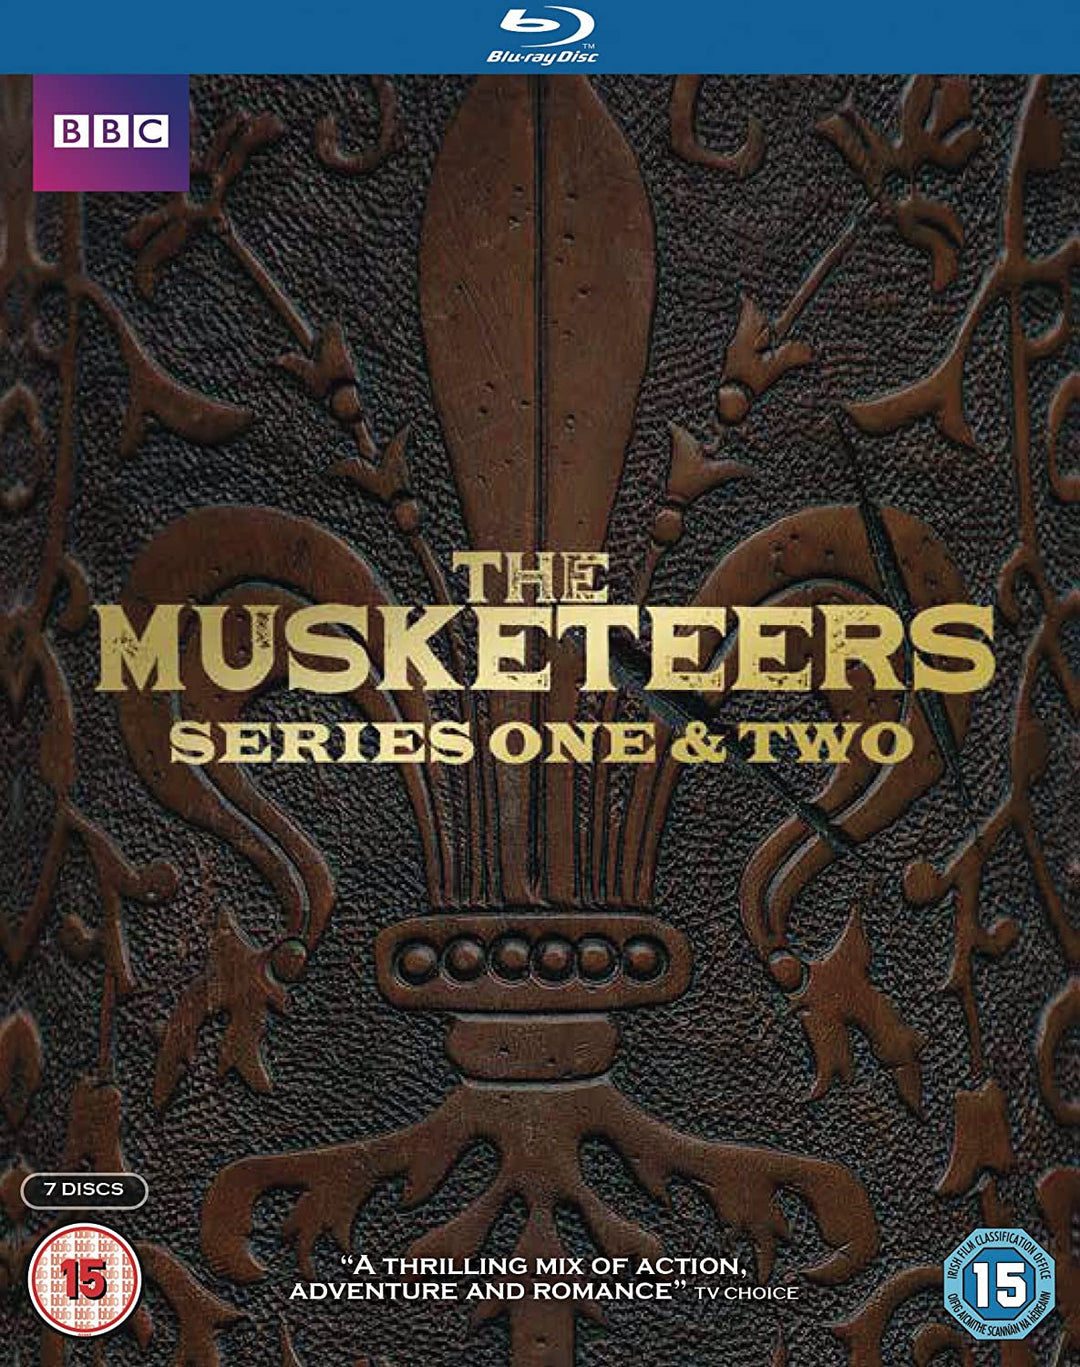 The Musketeers - Series 1-2 [Blu-ray]